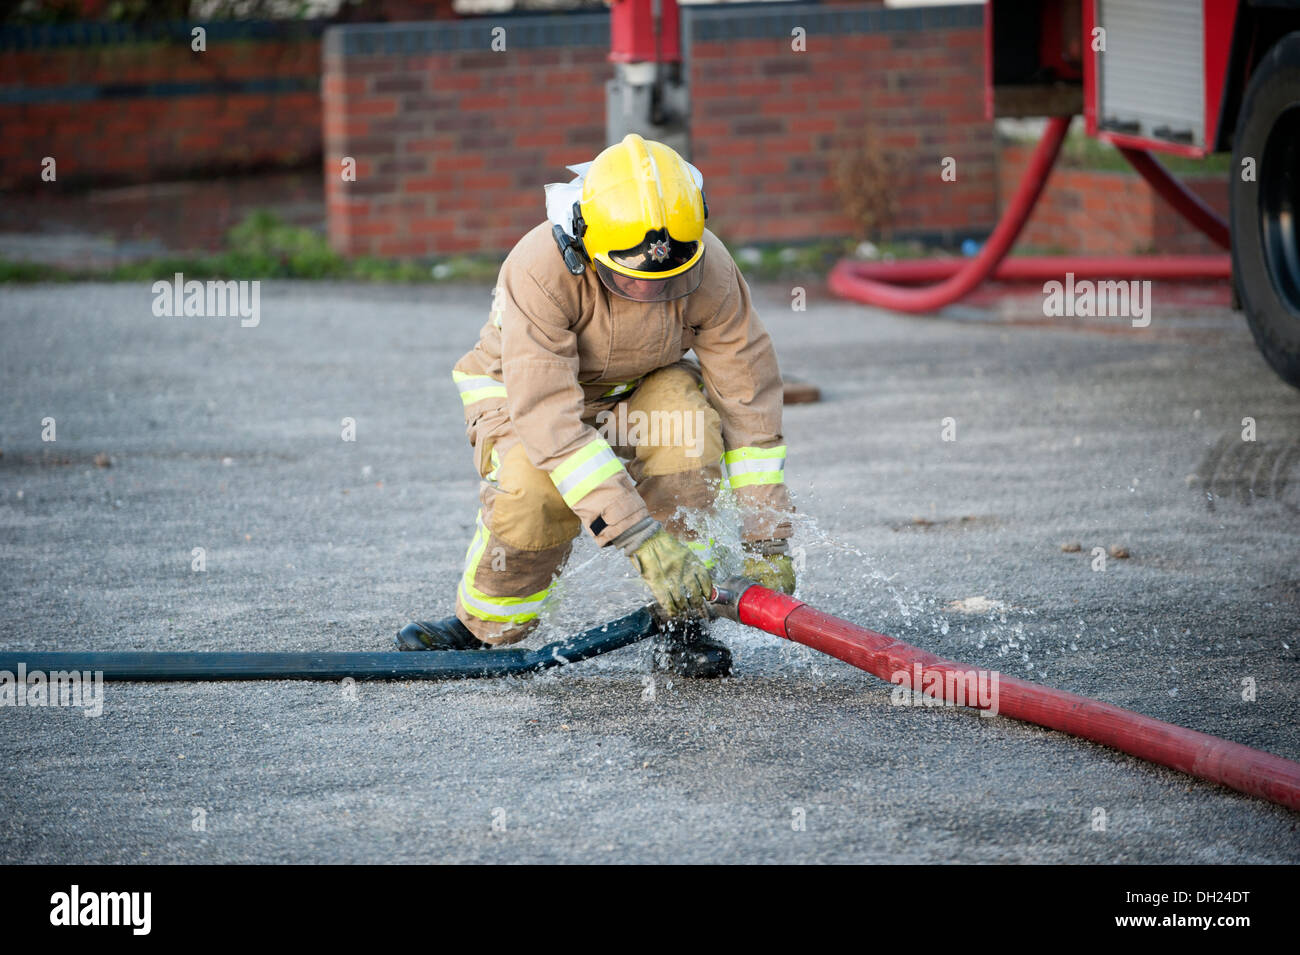 Firefighter un-coupling fire hose Stock Photo